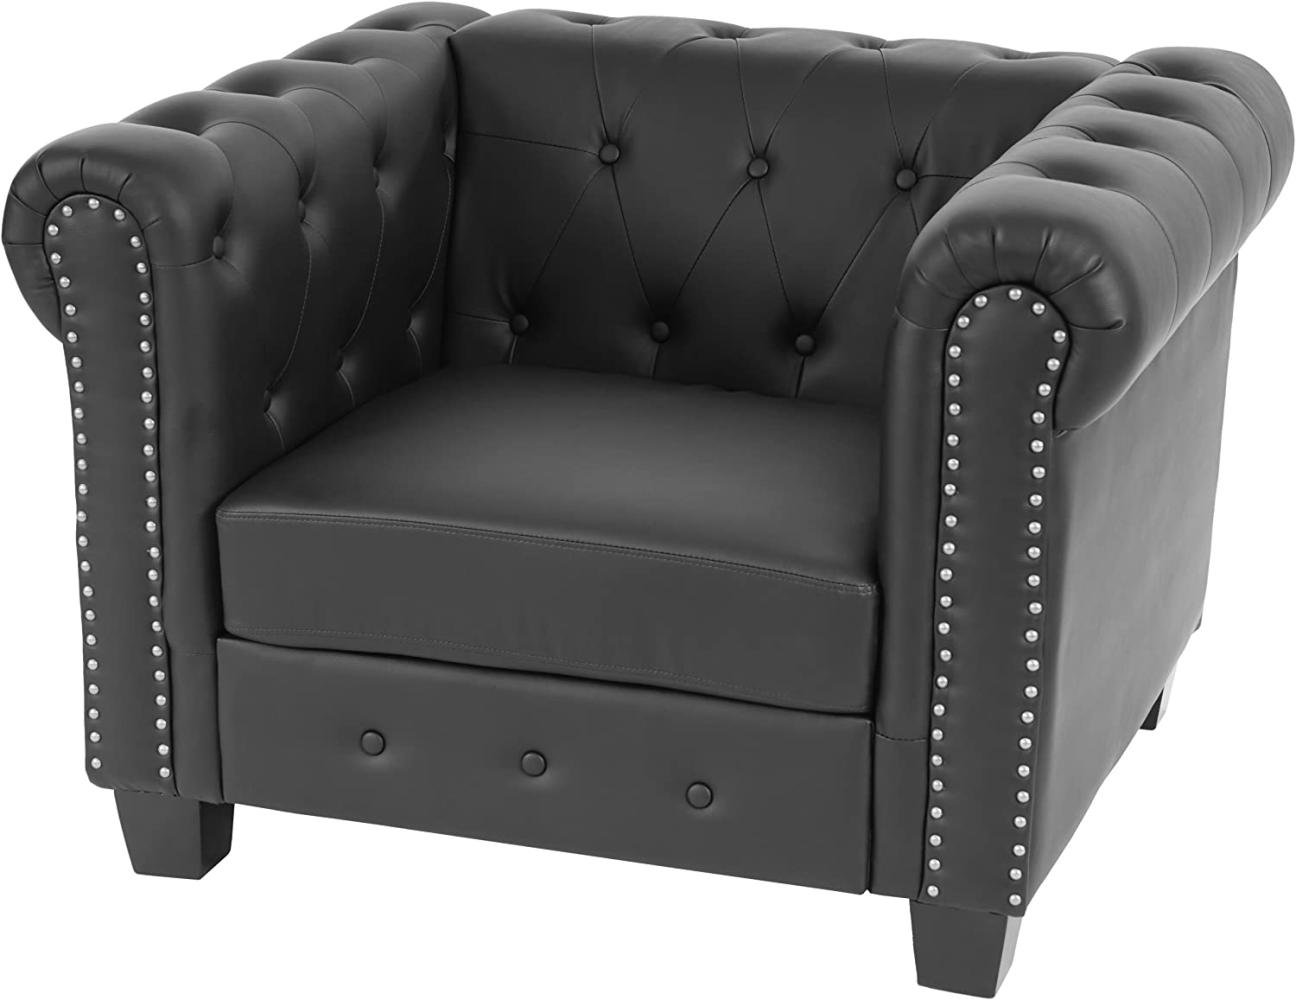 Luxus Sessel Loungesessel Relaxsessel Chesterfield Kunstleder ~ runde Füße, rot-braun Bild 1